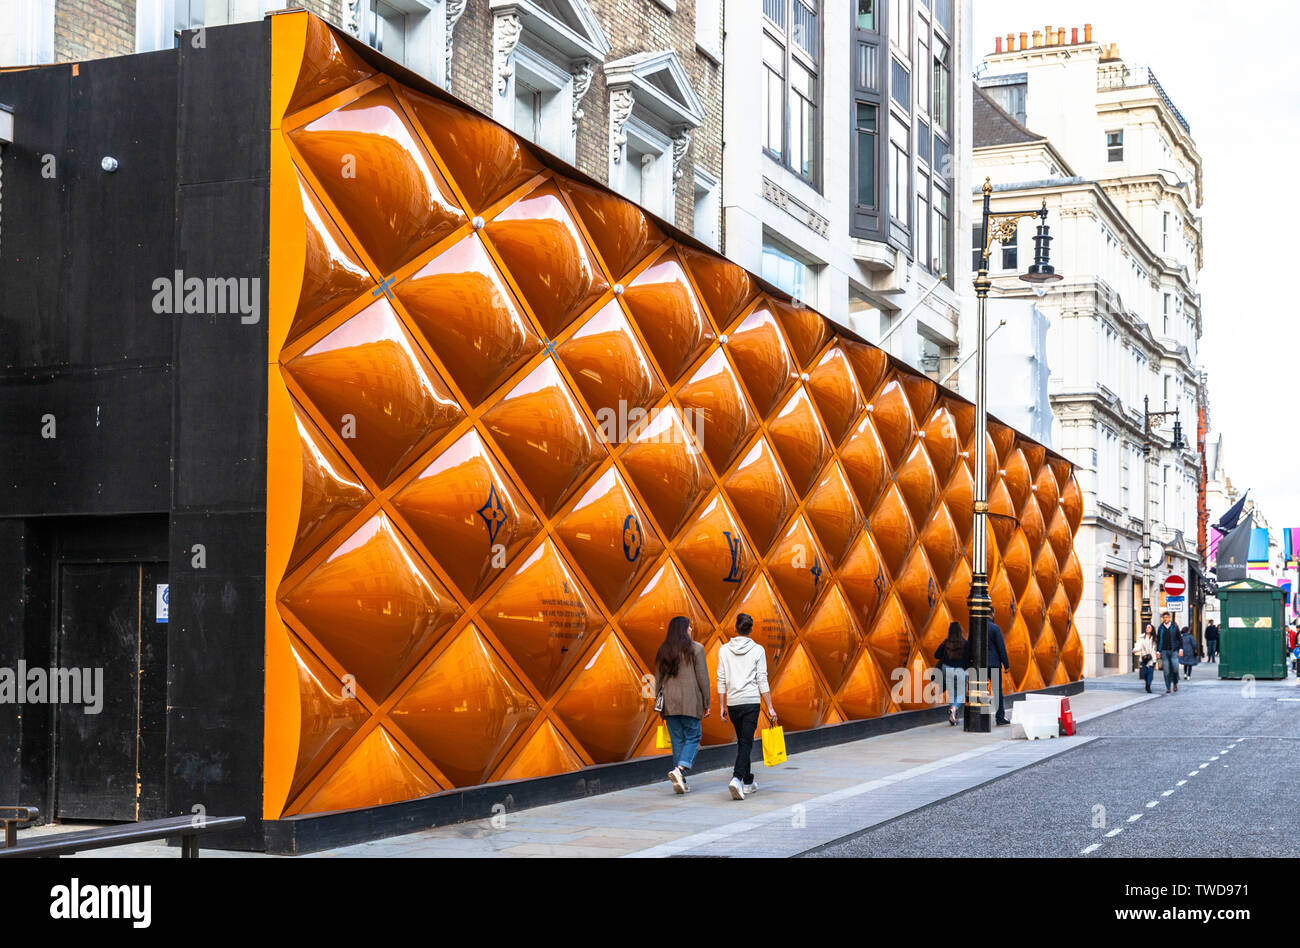 Louis Vuitton large advertising hoarding on New Bond street, London, England, UK. Stock Photo